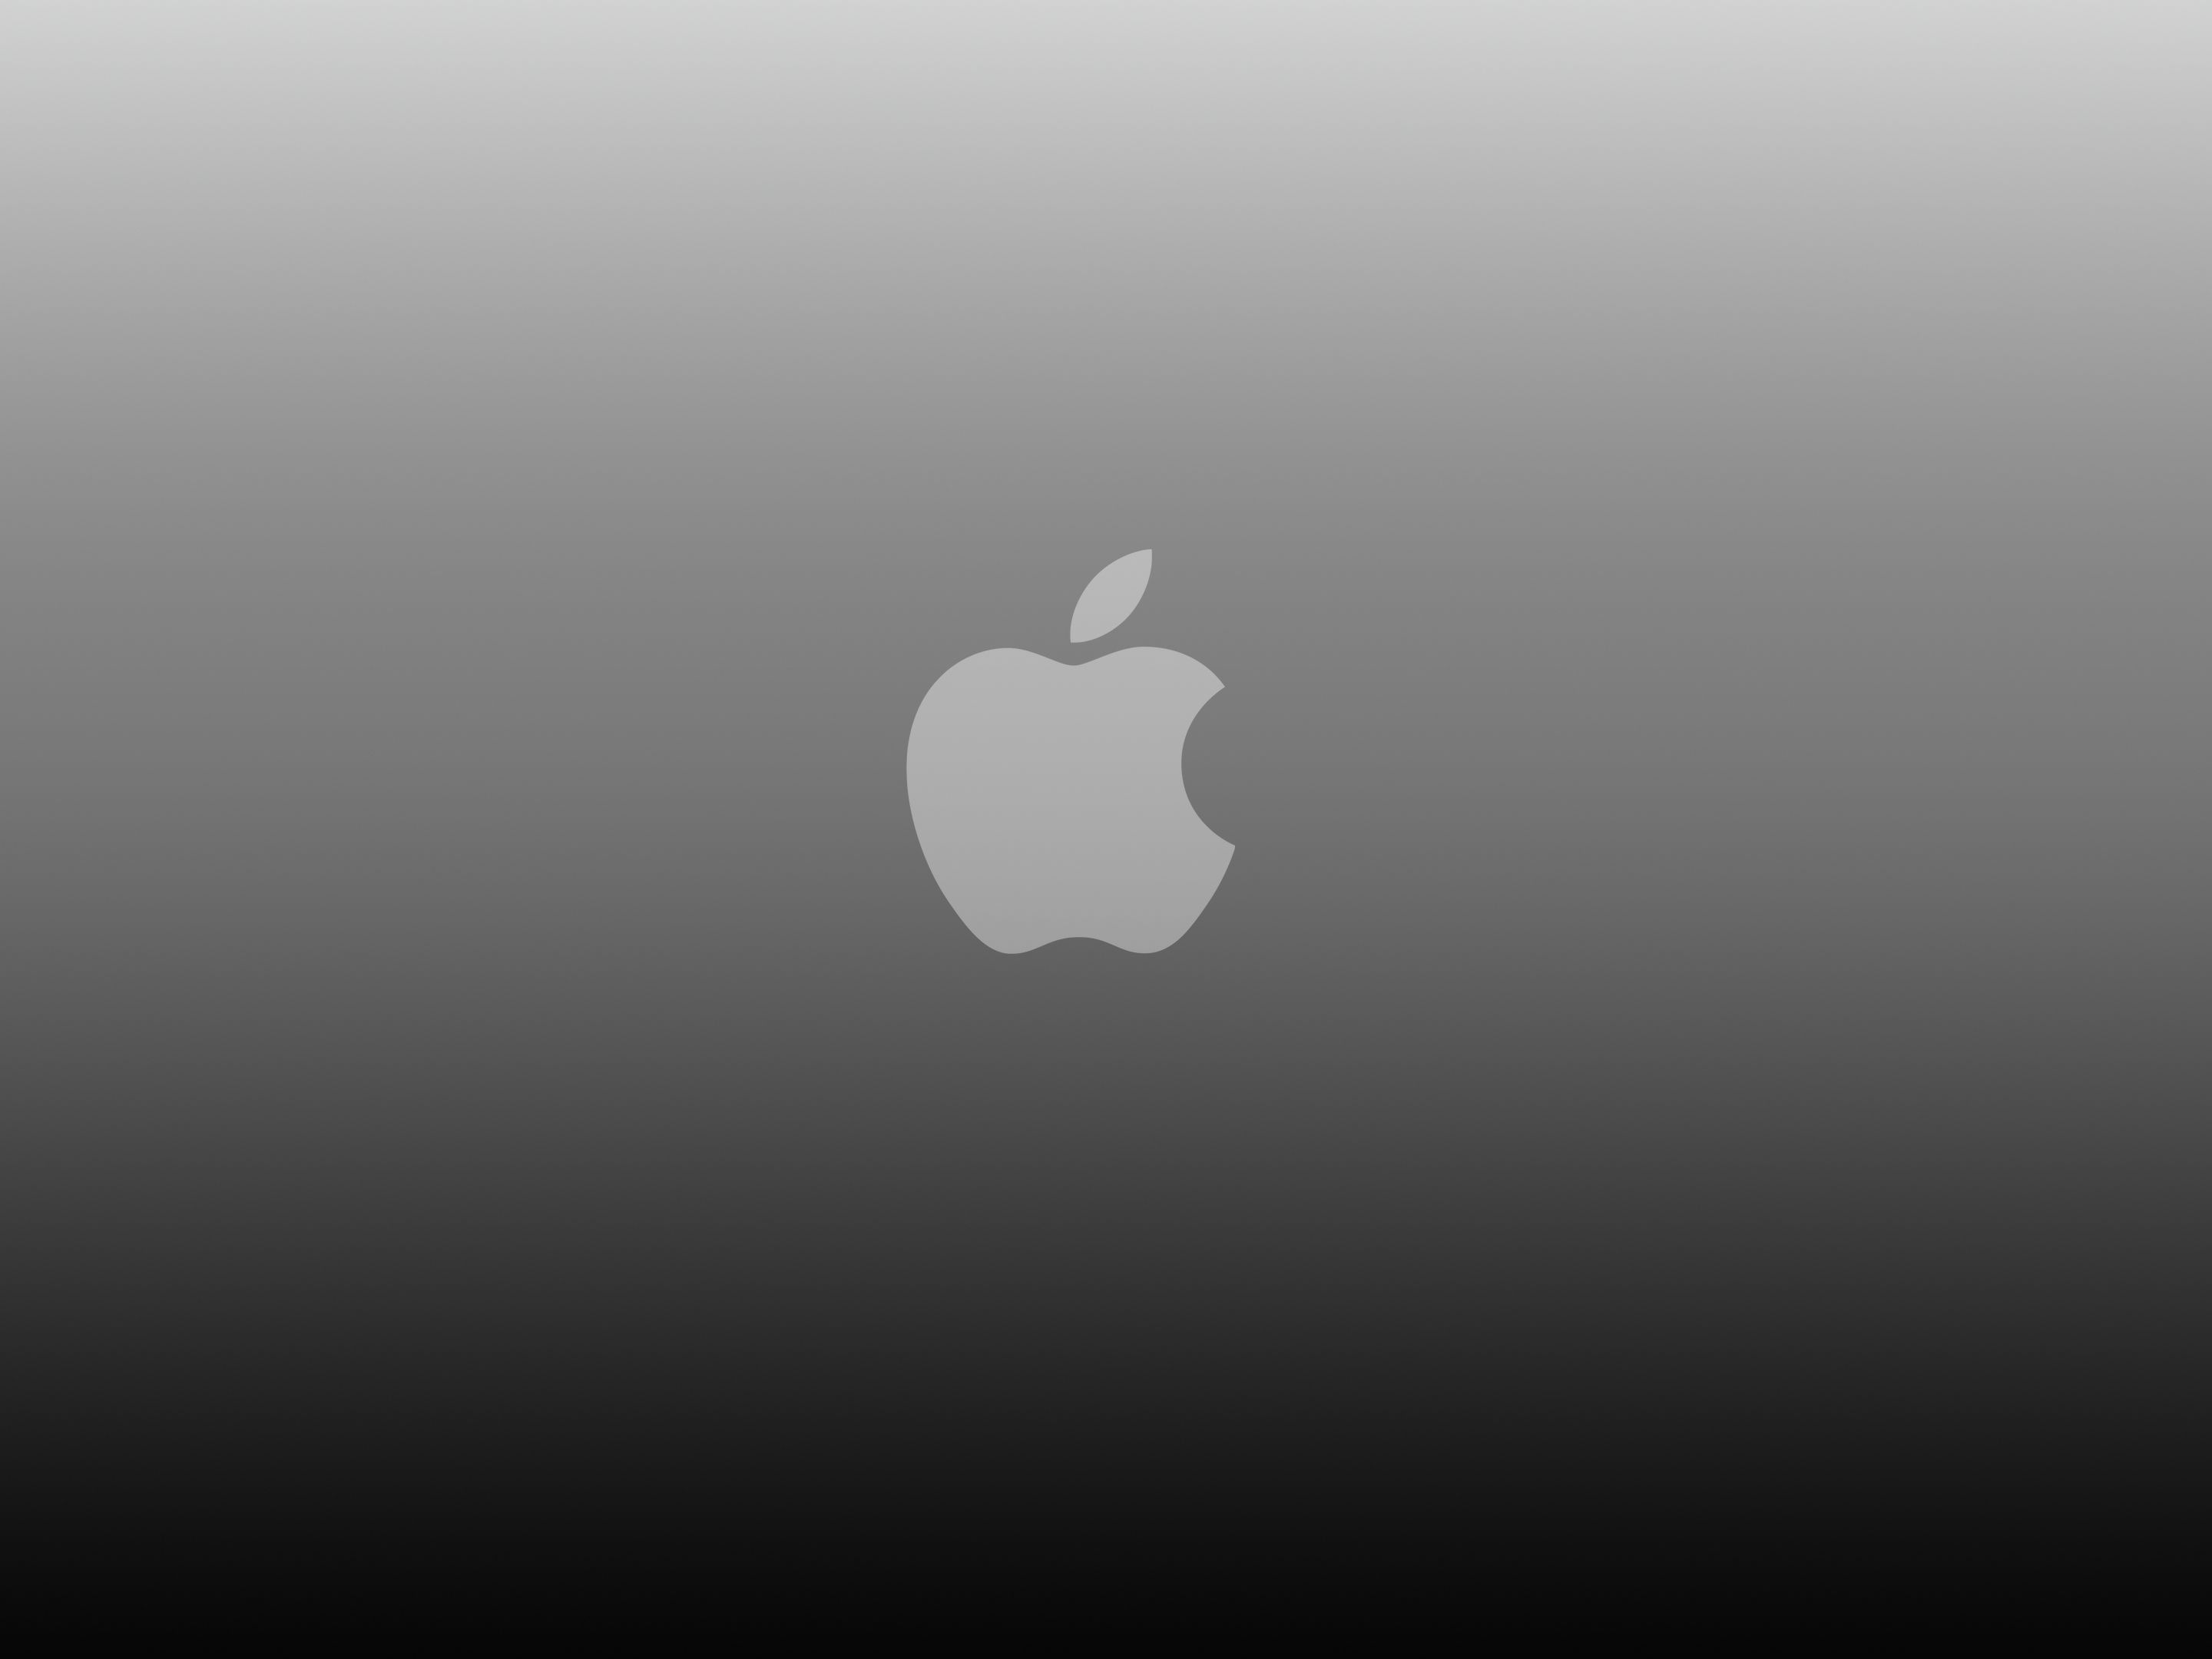 greyscale-apple-logo-wallpaper.jpg